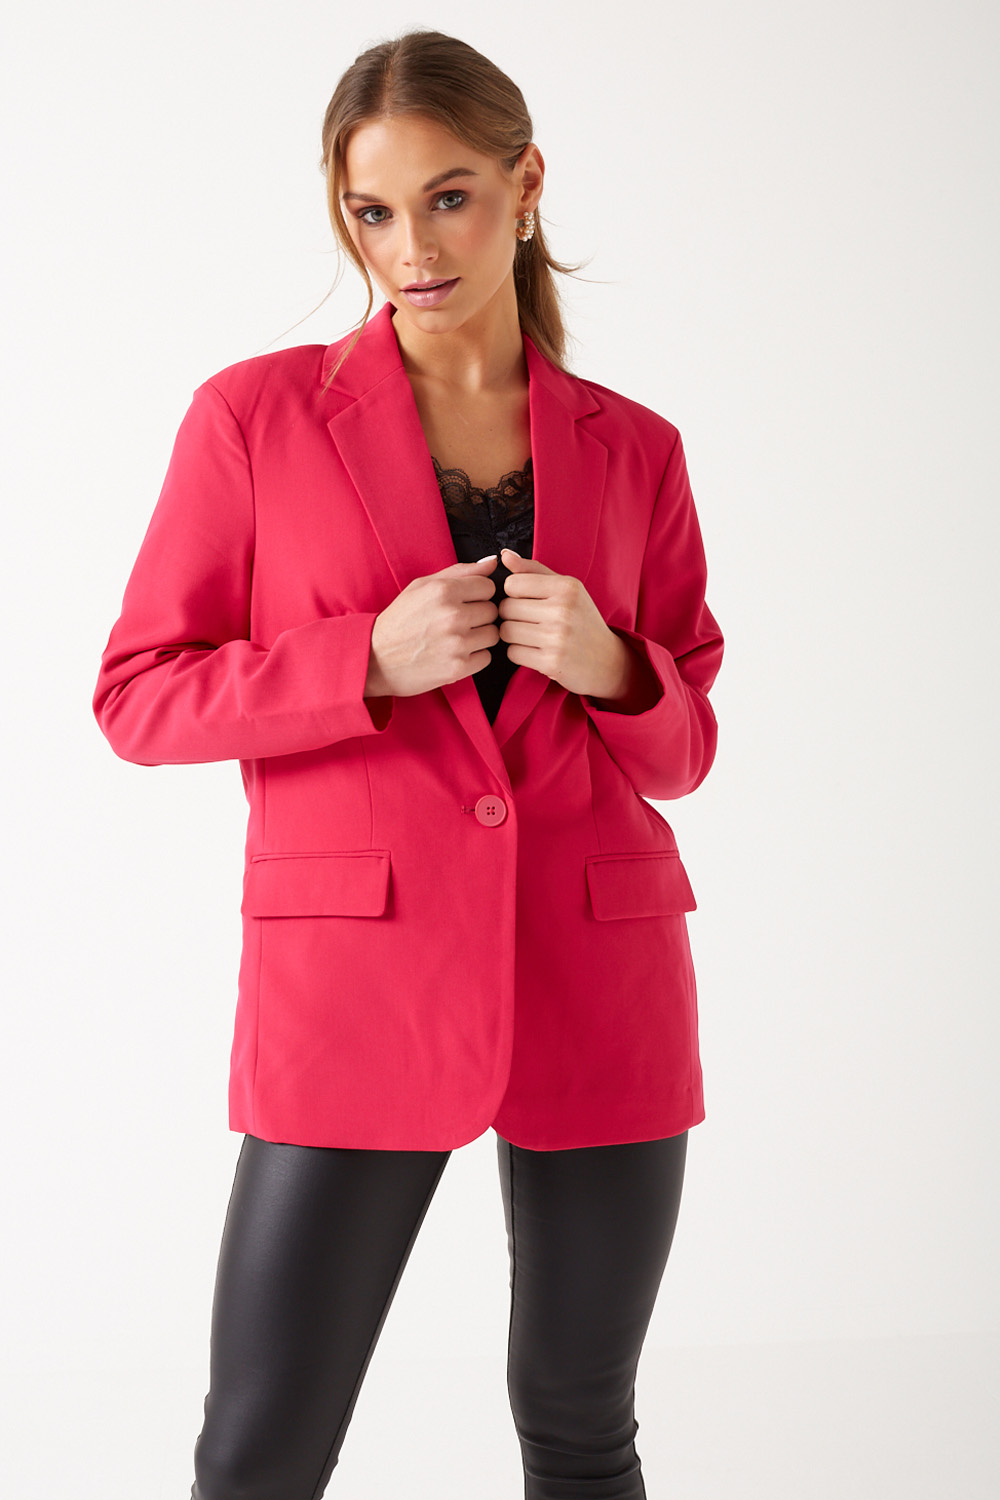 Vero Moda Theatroian Blazer in Hot Pink